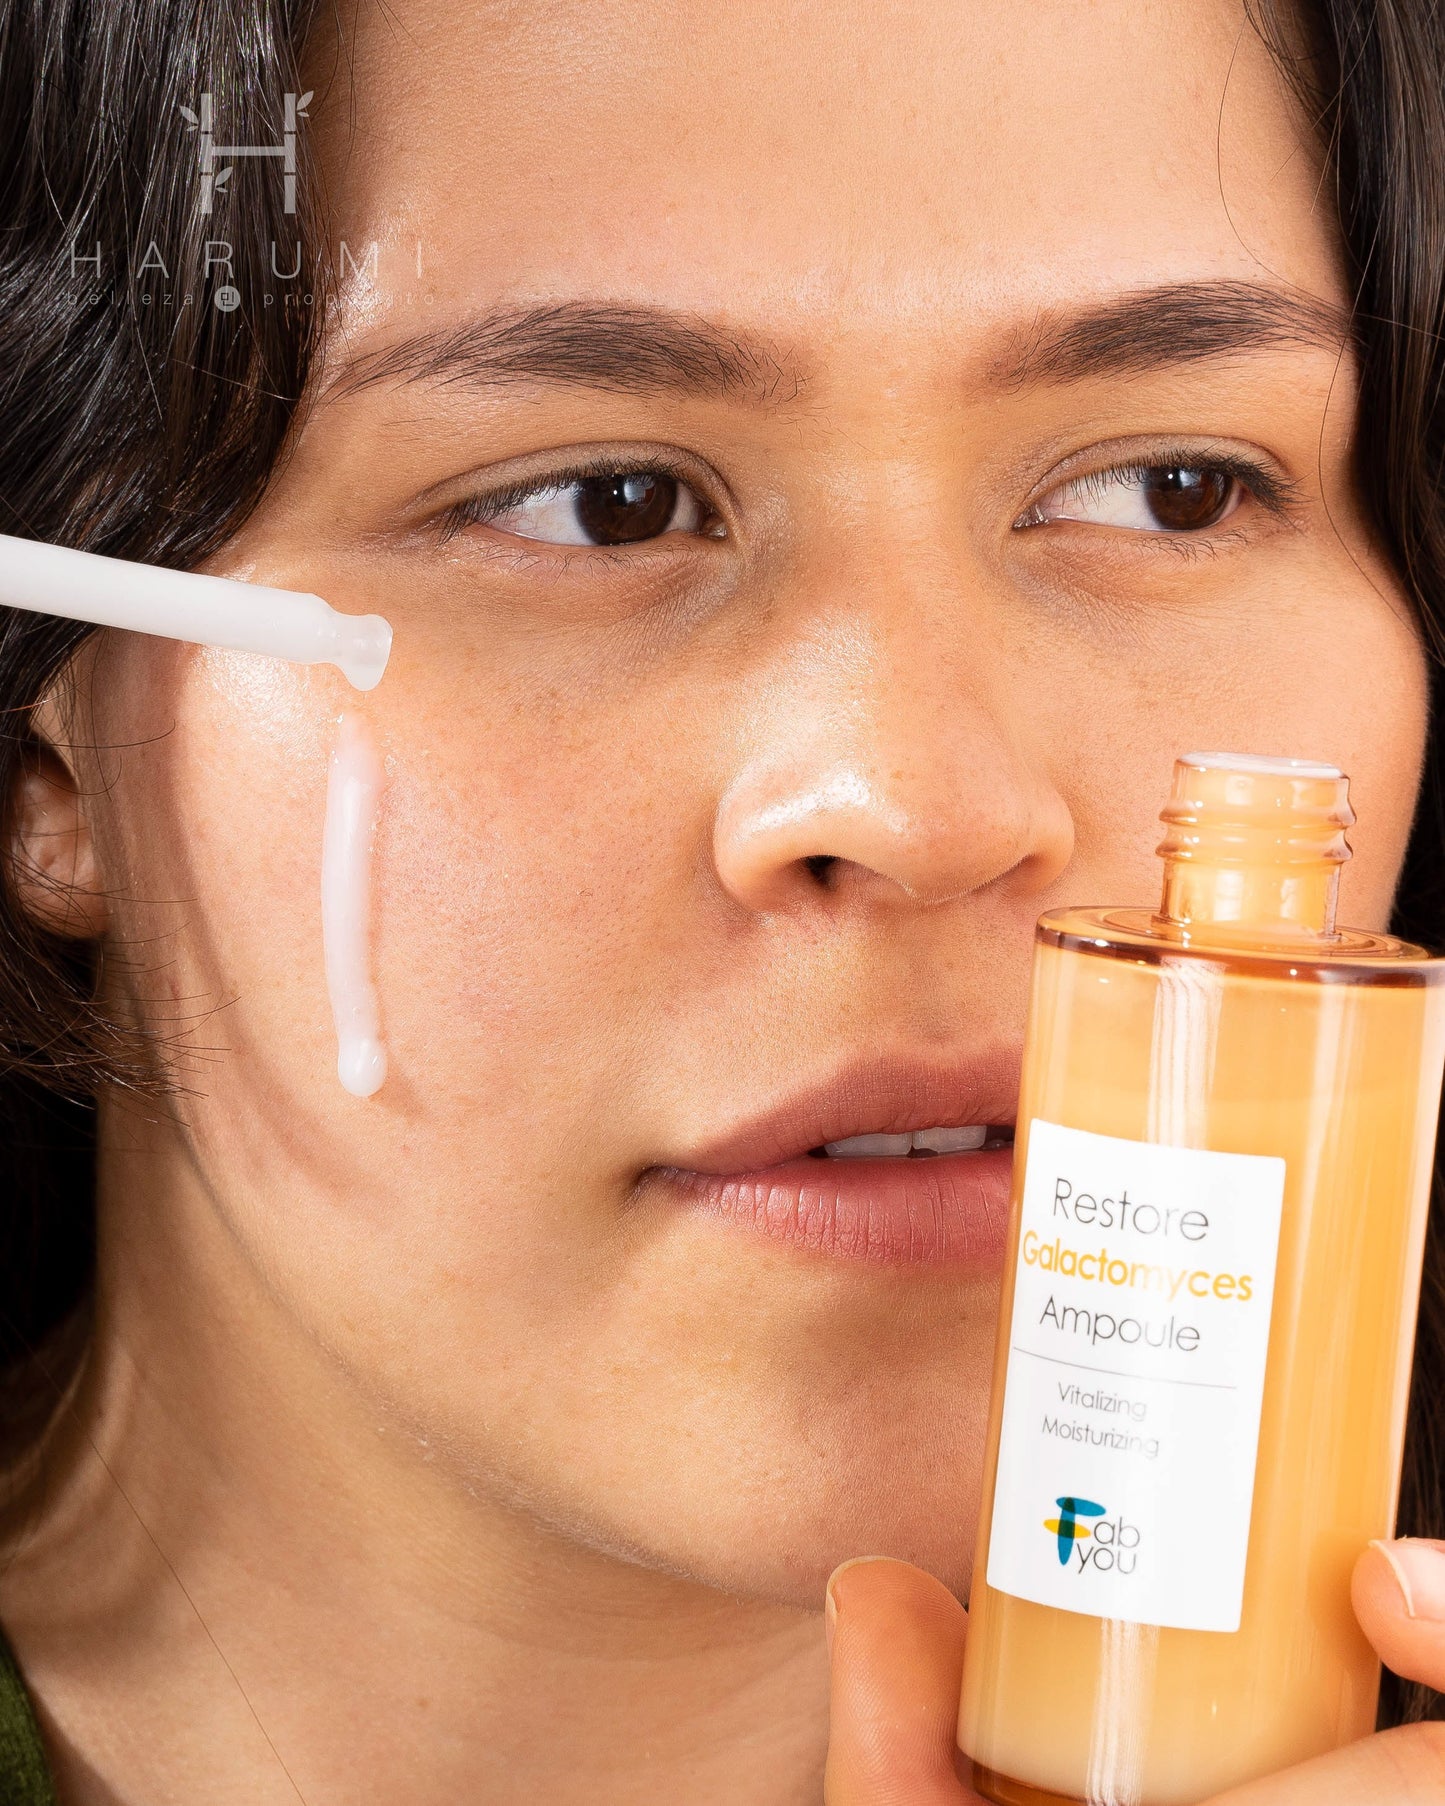 Fabyou Restore Galactomyces Ampoule Skincare maquillaje productos de belleza coreanos en Colombia kbeauty